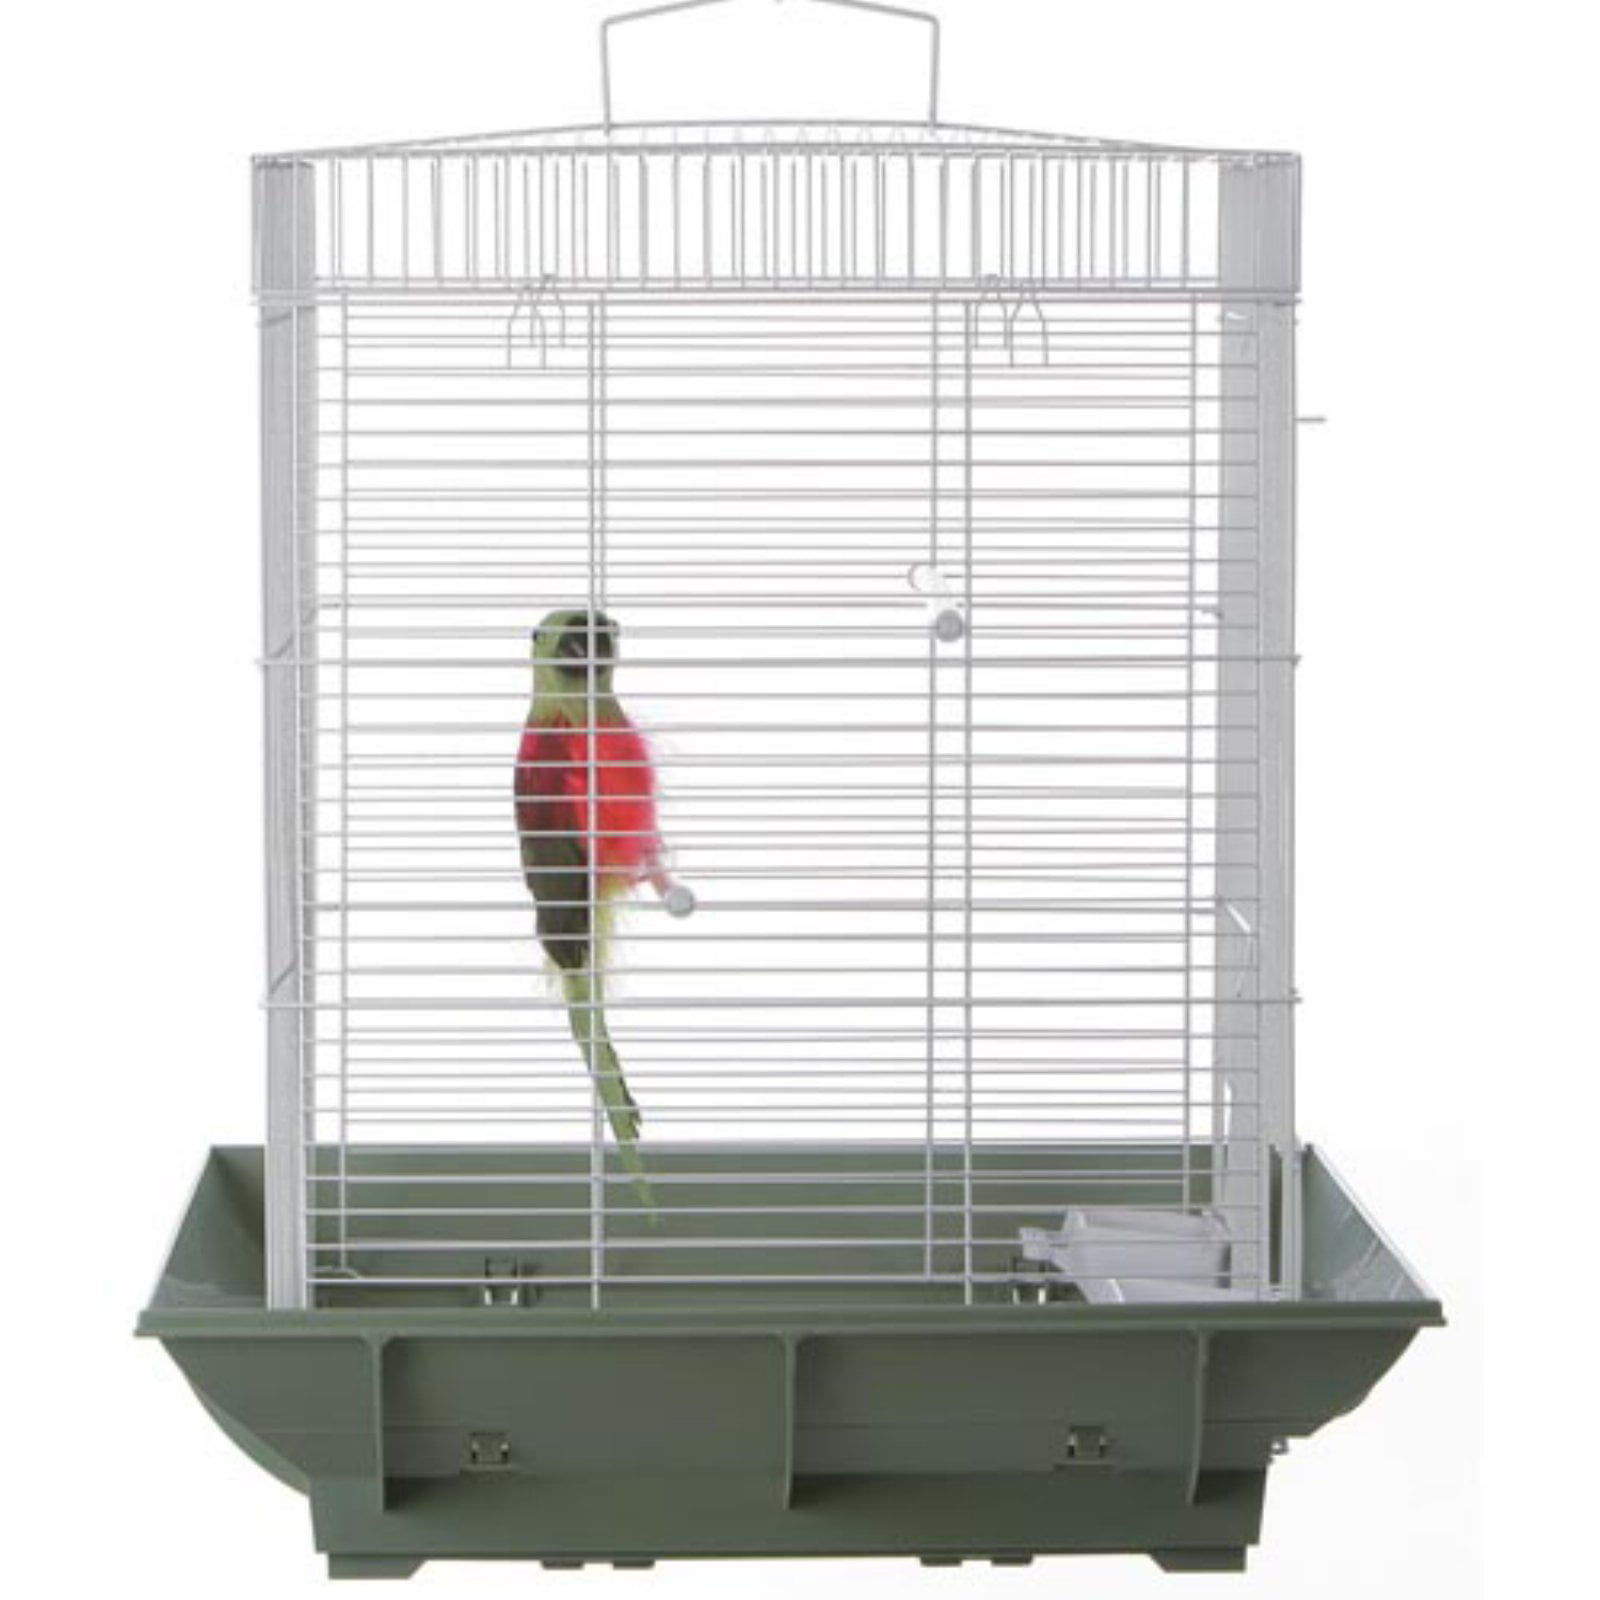 Prevue Clean Life 850 Bird Cage